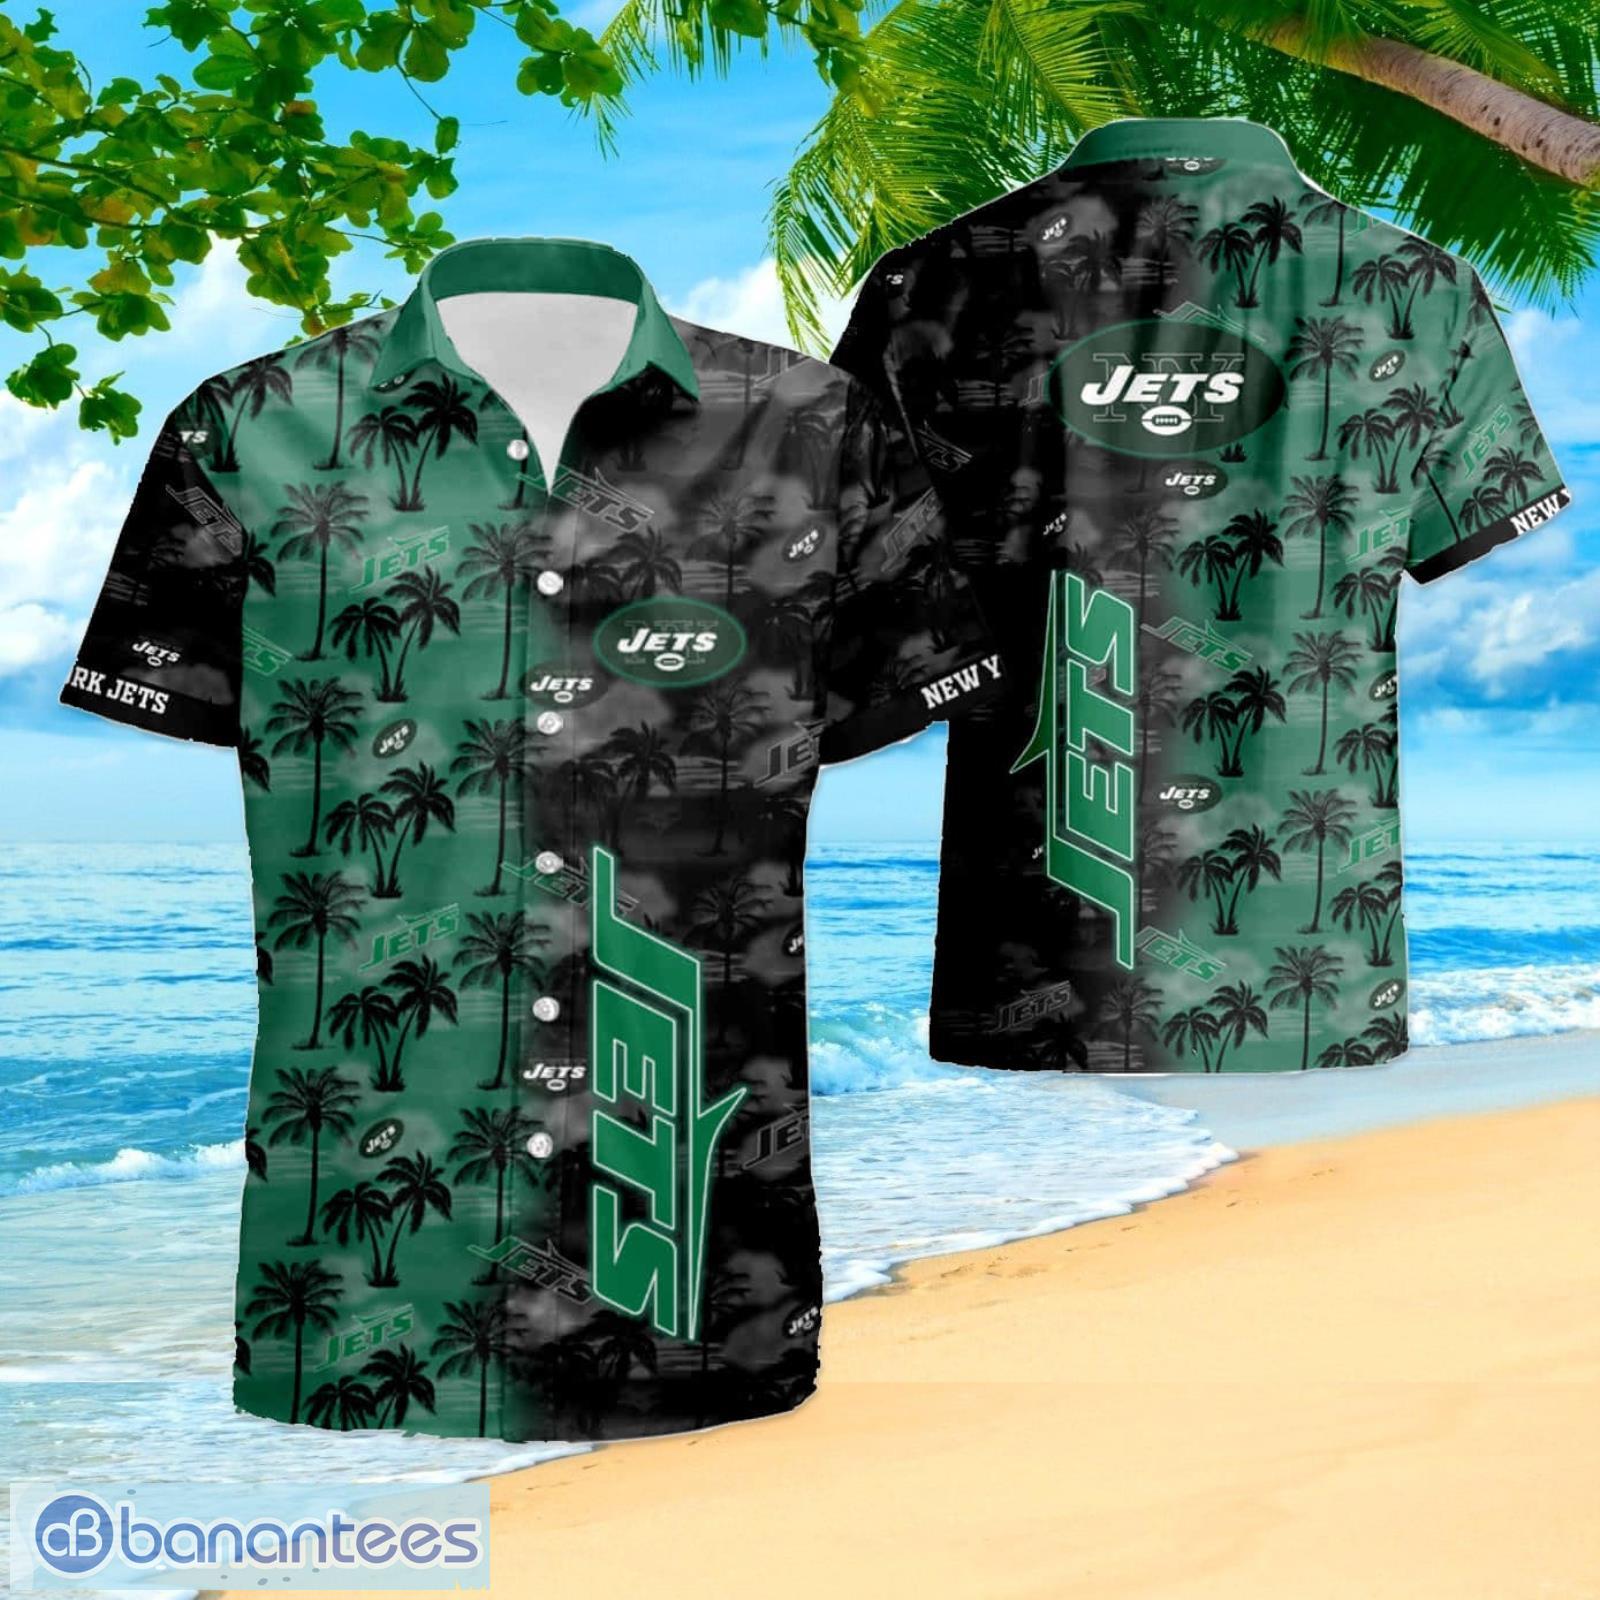 New York Giants Skull1 Summer Hawaiian Shirt And Shorts - Banantees